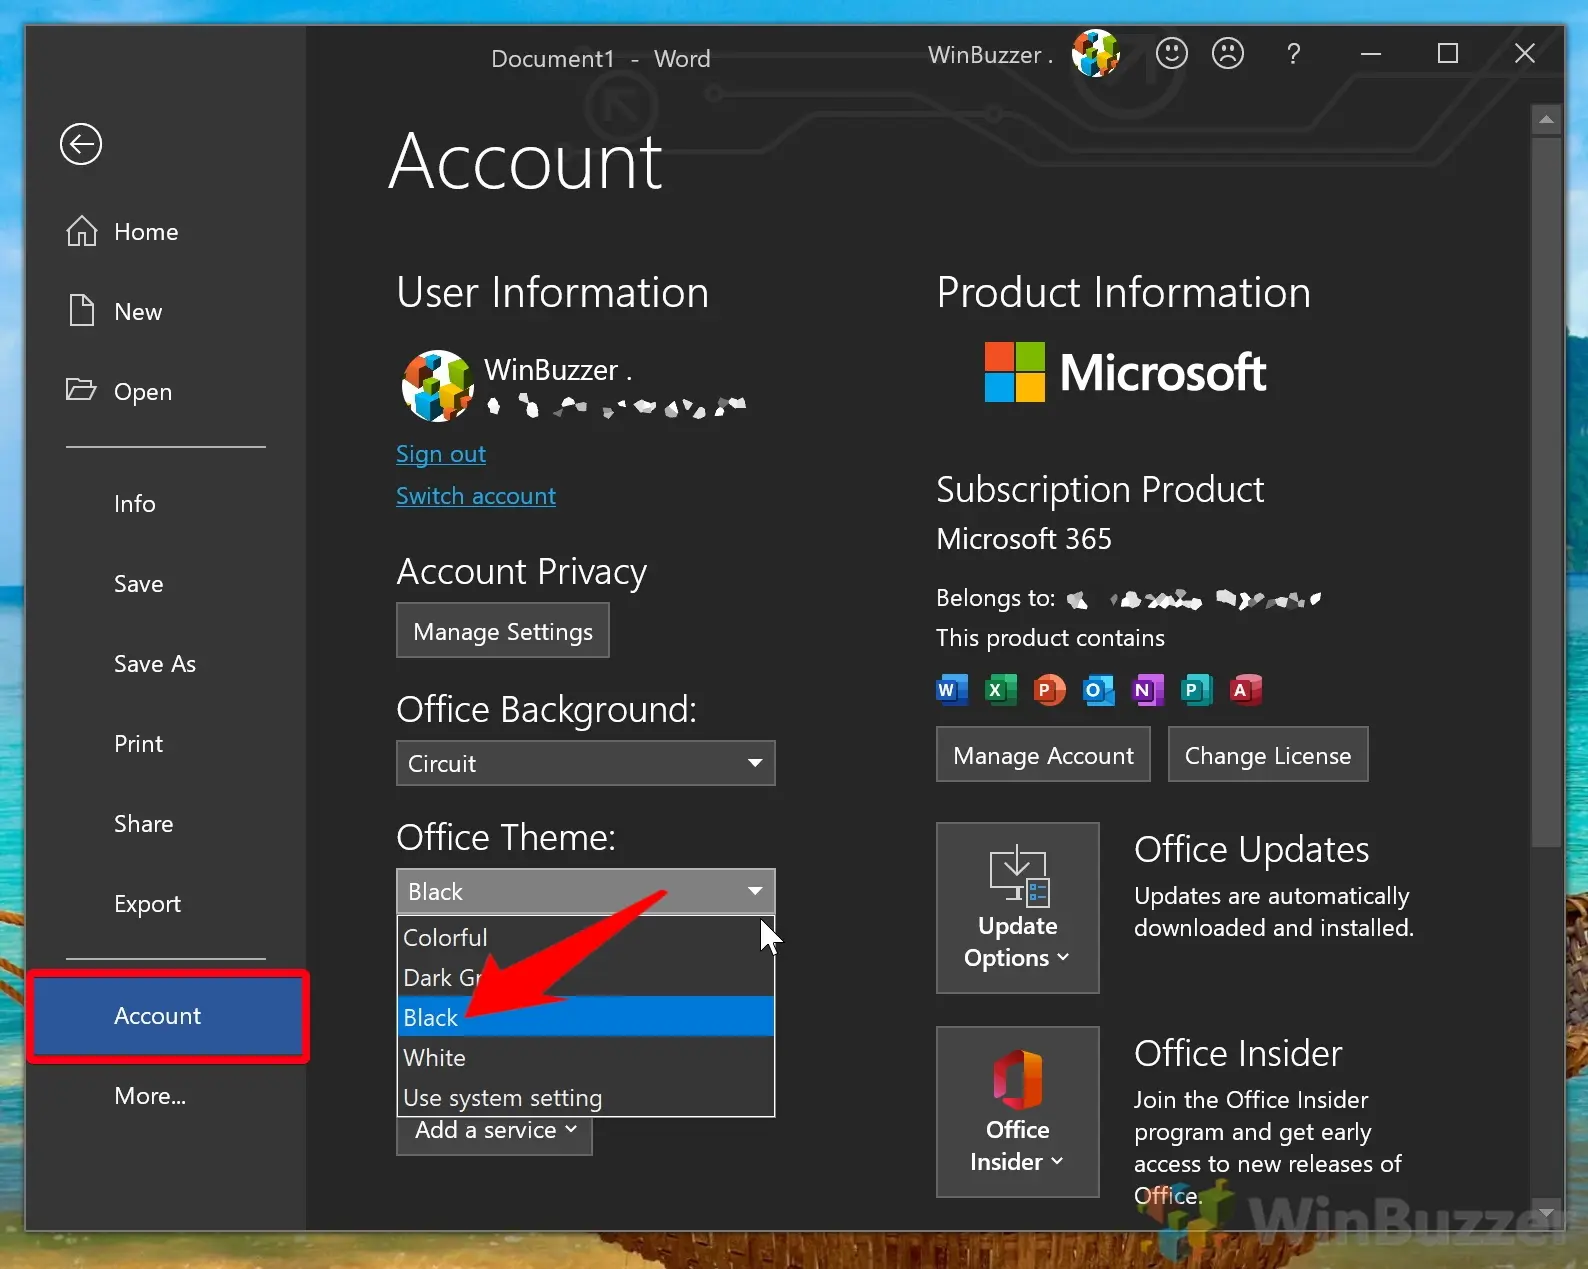 Windows 10 - Word - File - Account - Office Theme - Black